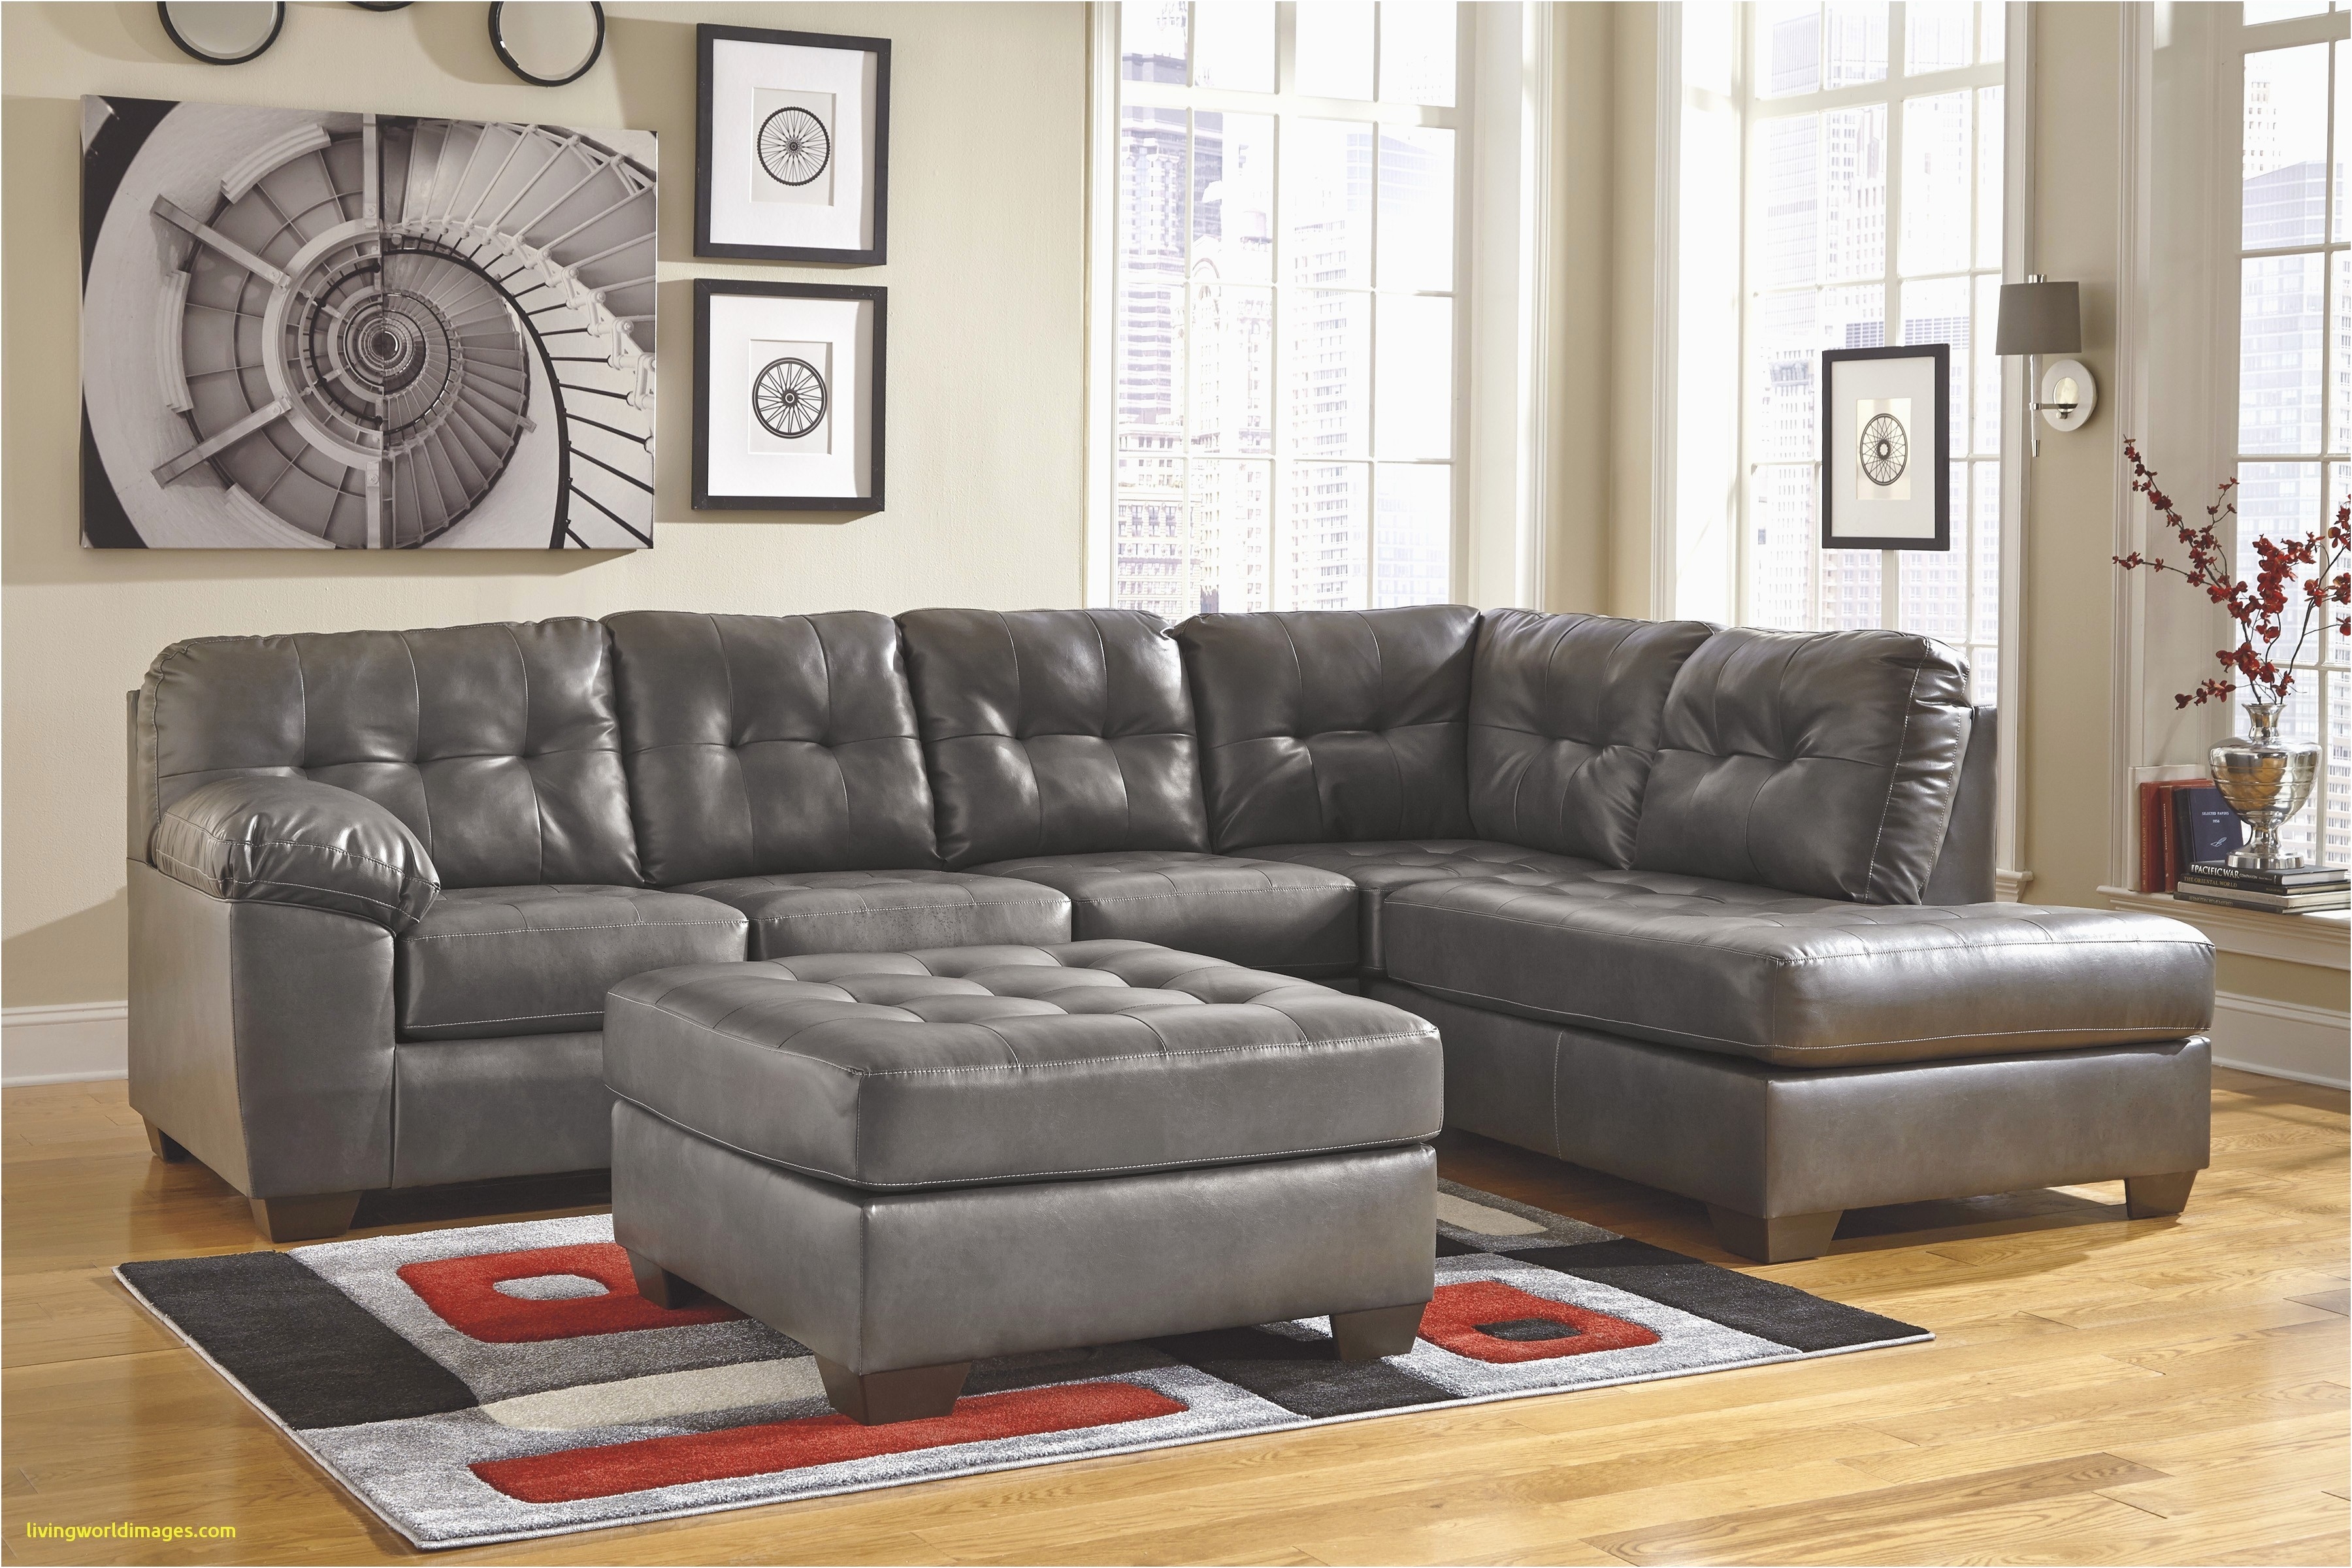 full size of sofas sectional sofas ashley furniture ashley furniture living room sets ashley gray